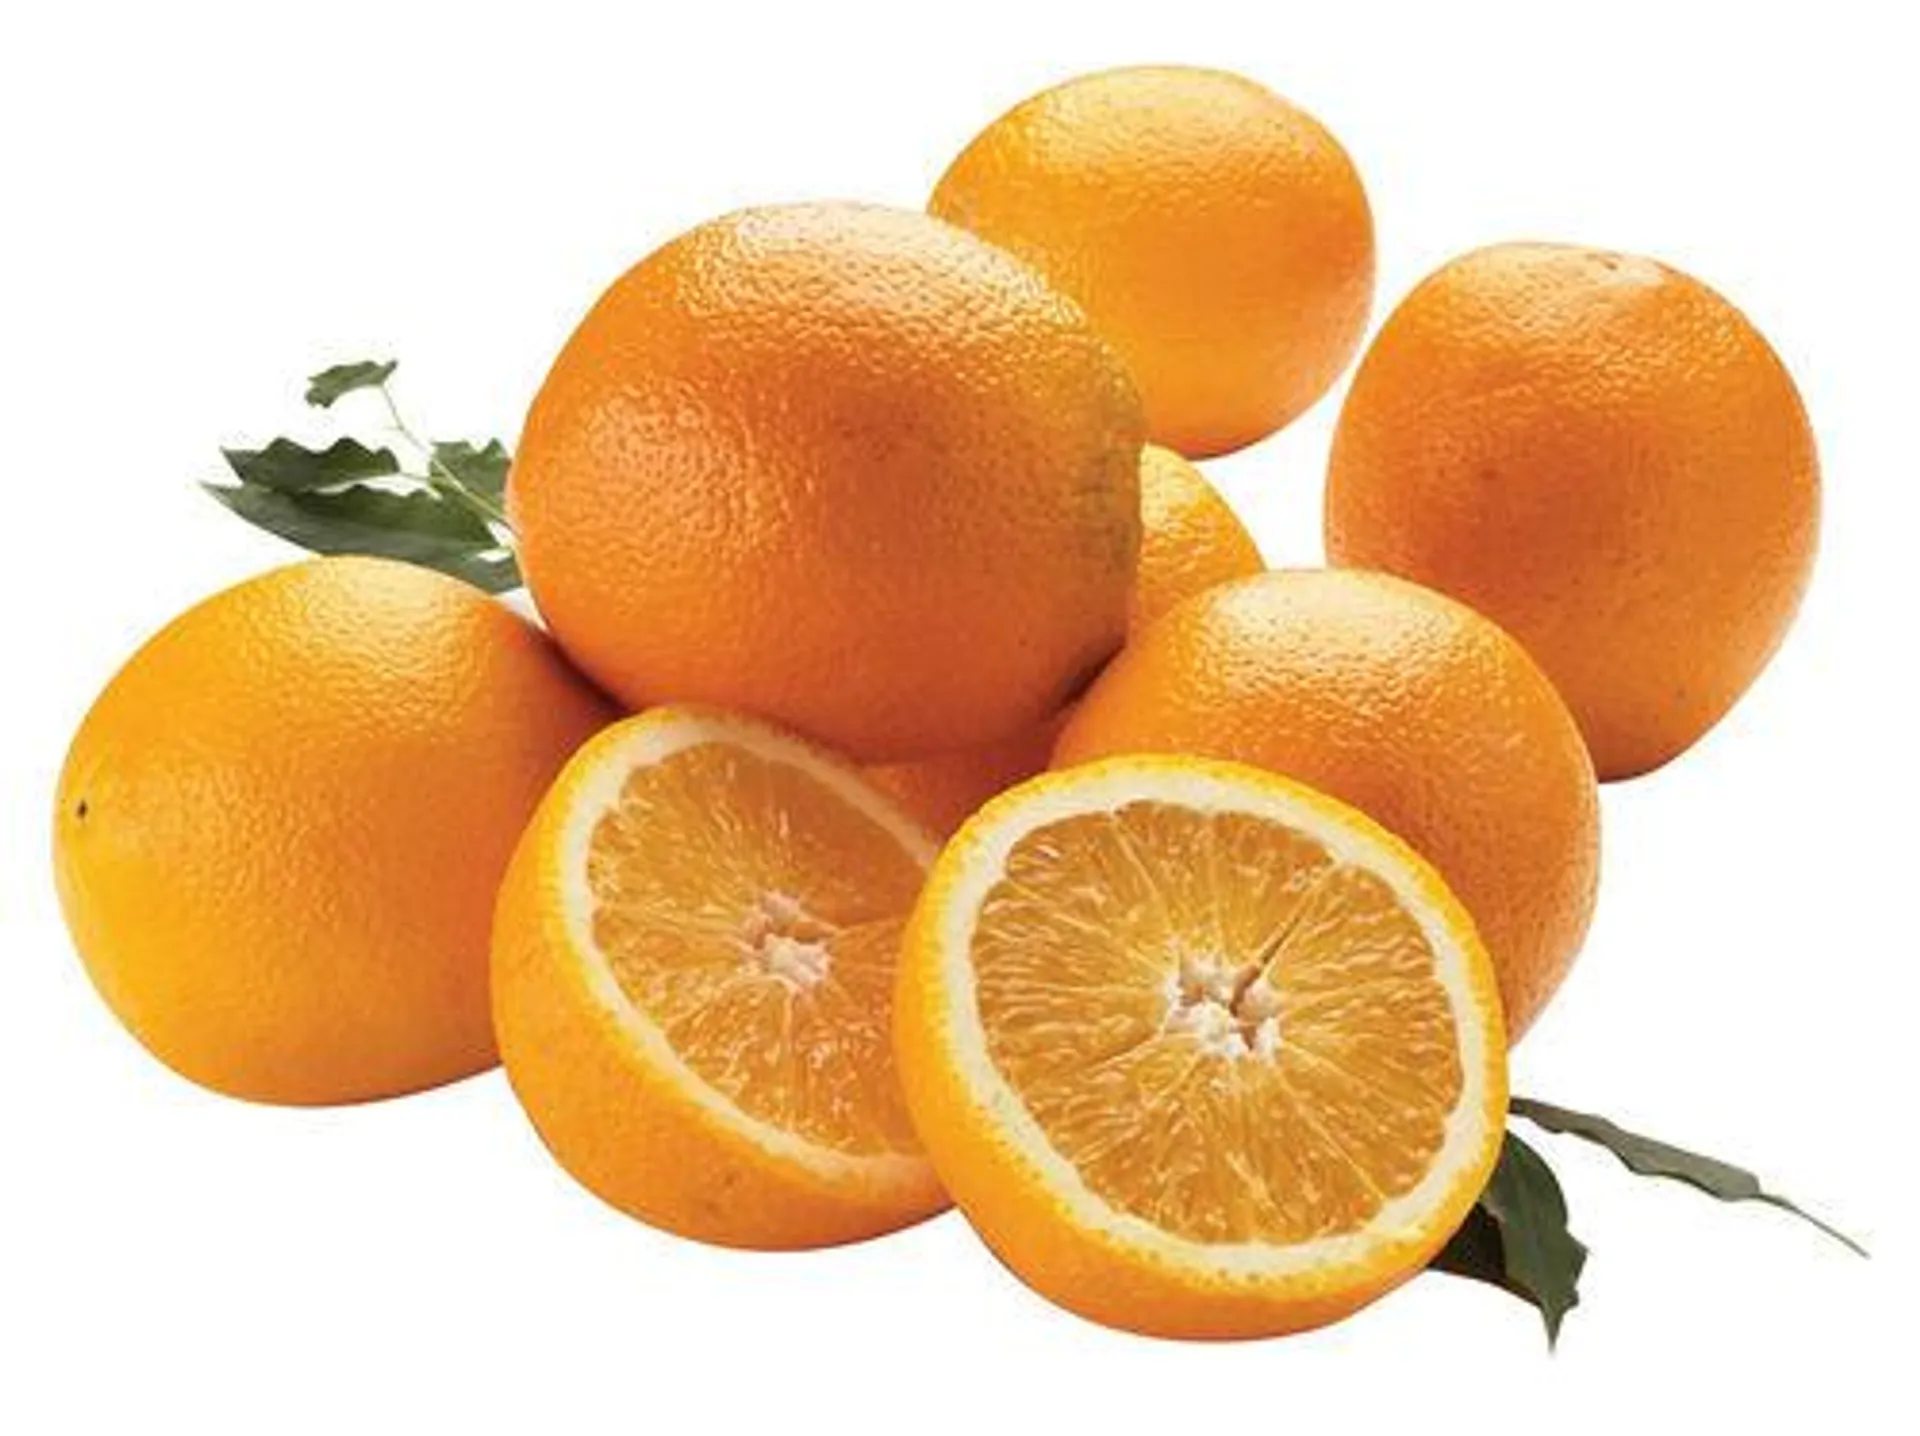 laranja do algarve igp auchan kg